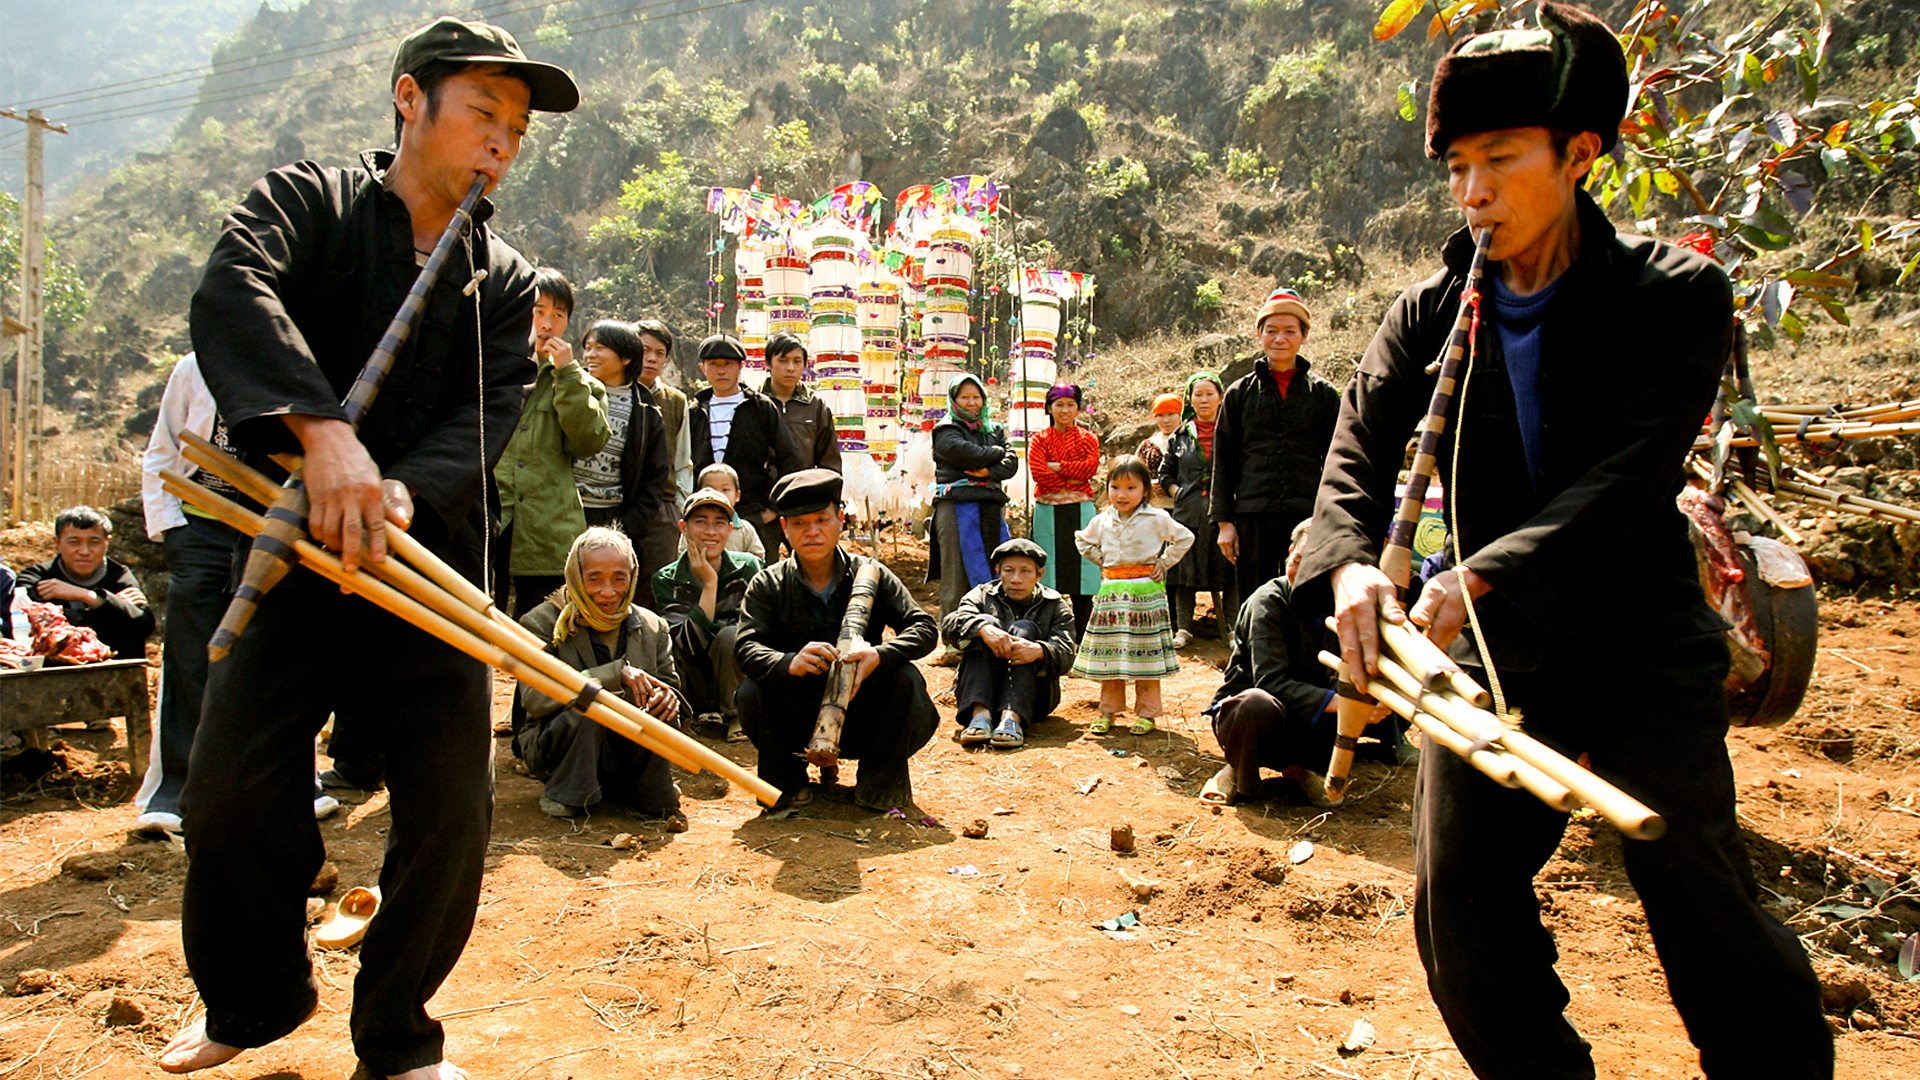 Hmong qeej performance